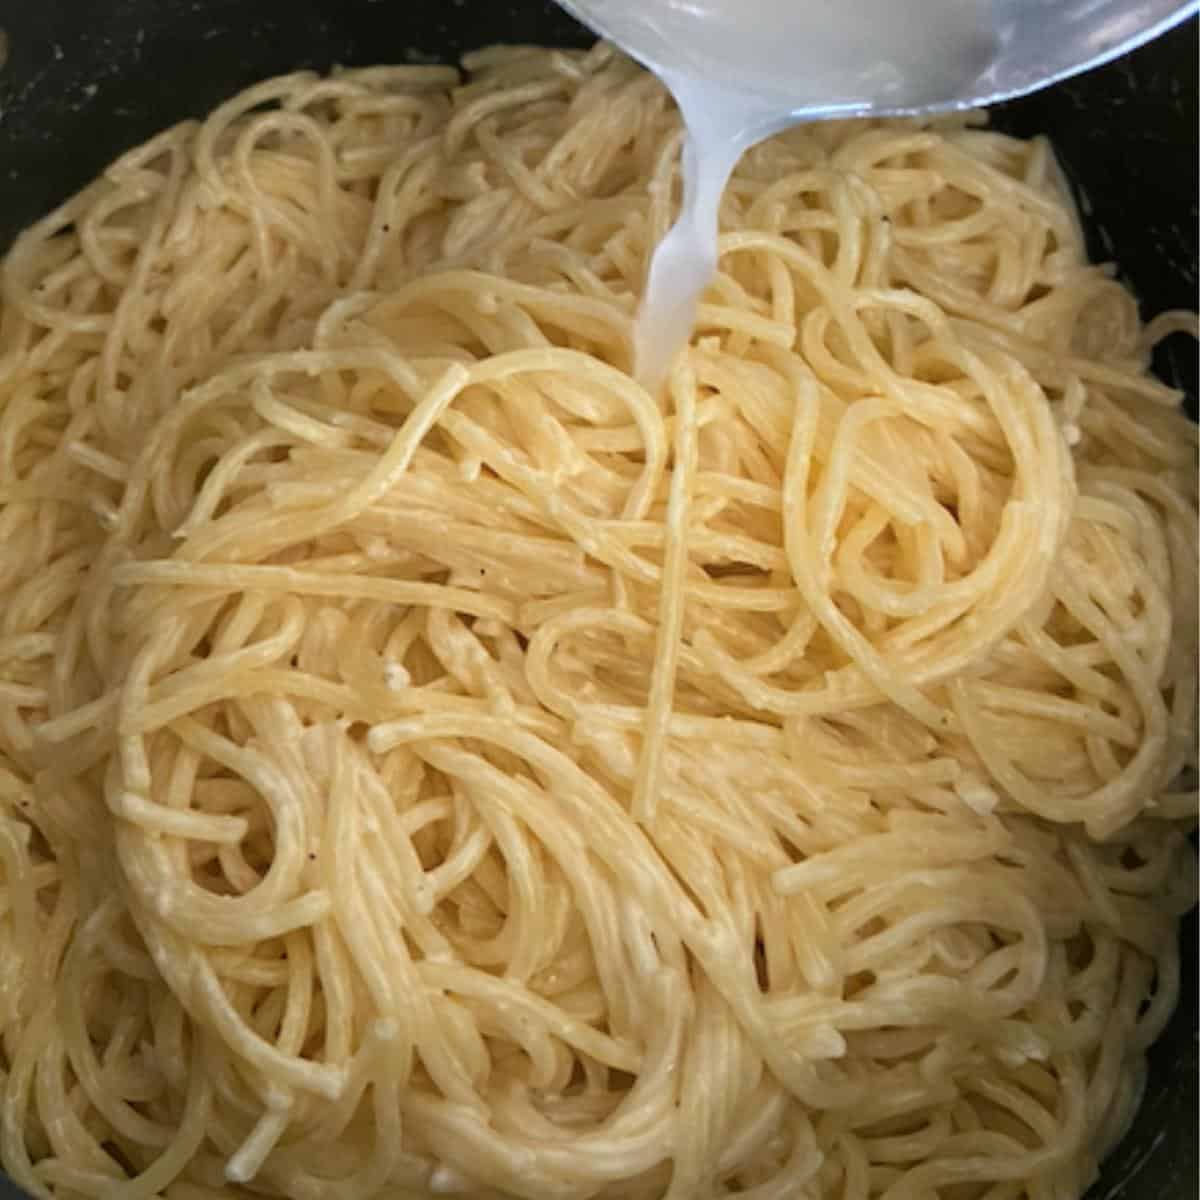 pasta water mixing into creamy pasta